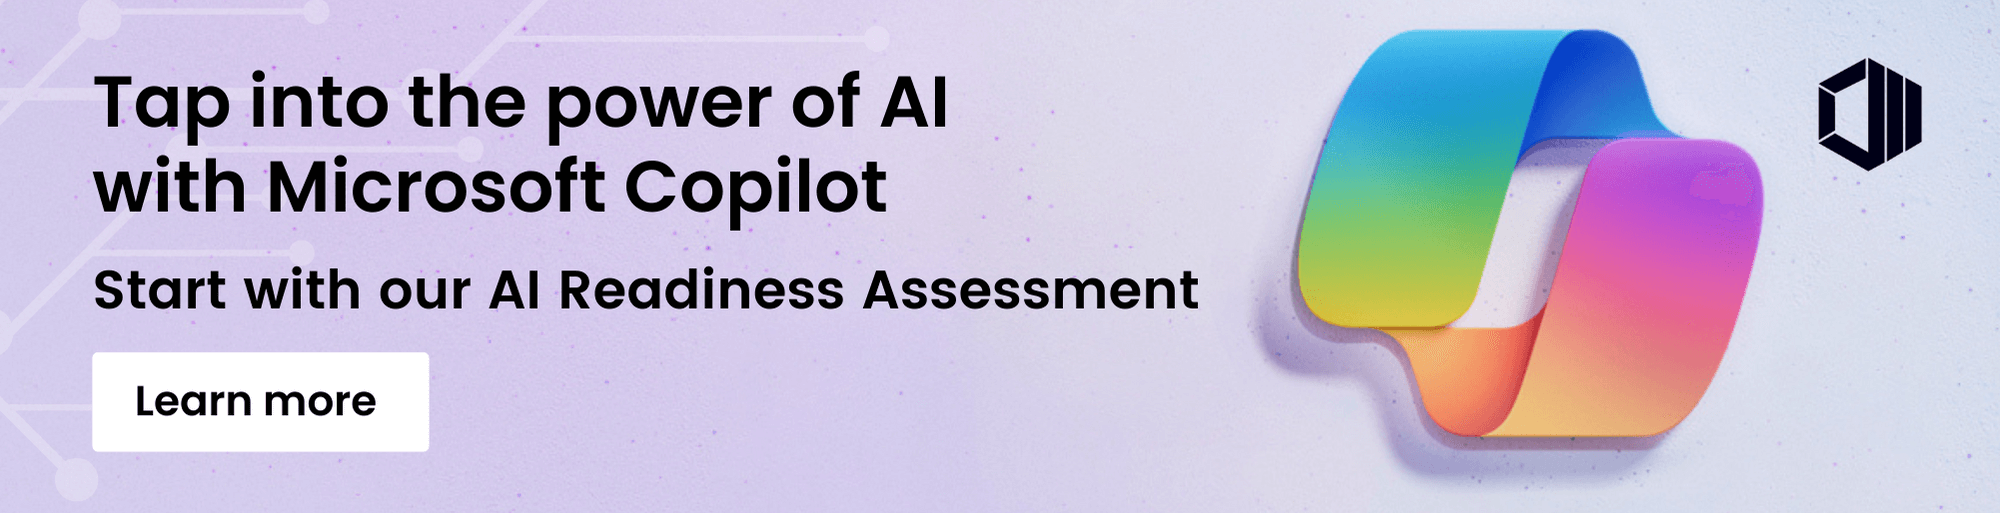 AI Readiness Assessment banner- Microsoft Copilot